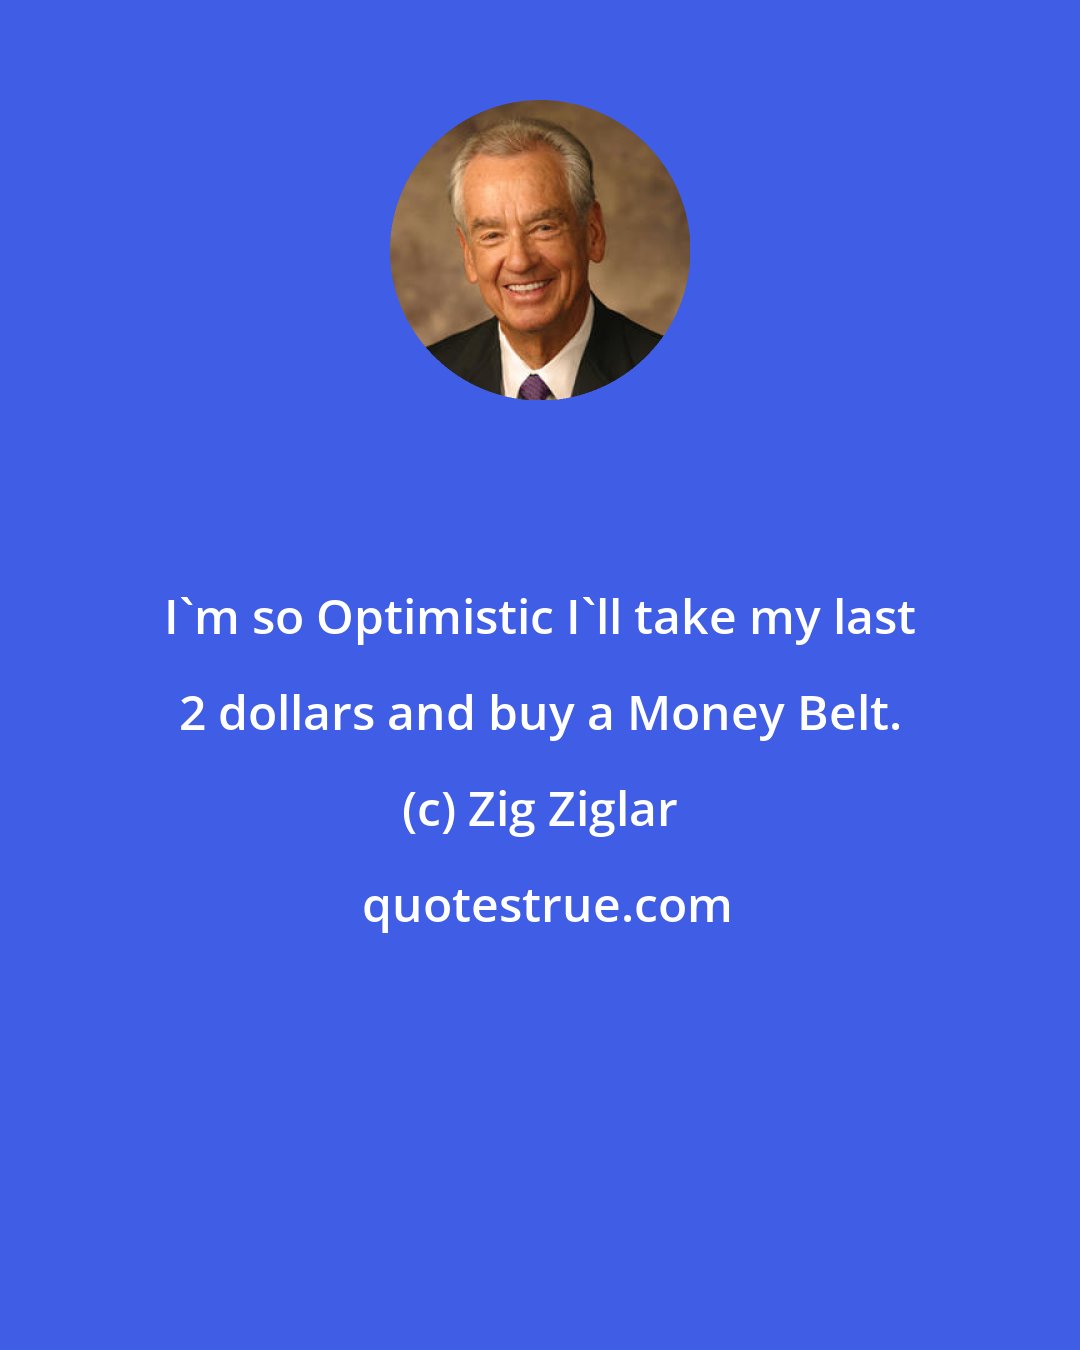 Zig Ziglar: I'm so Optimistic I'll take my last 2 dollars and buy a Money Belt.